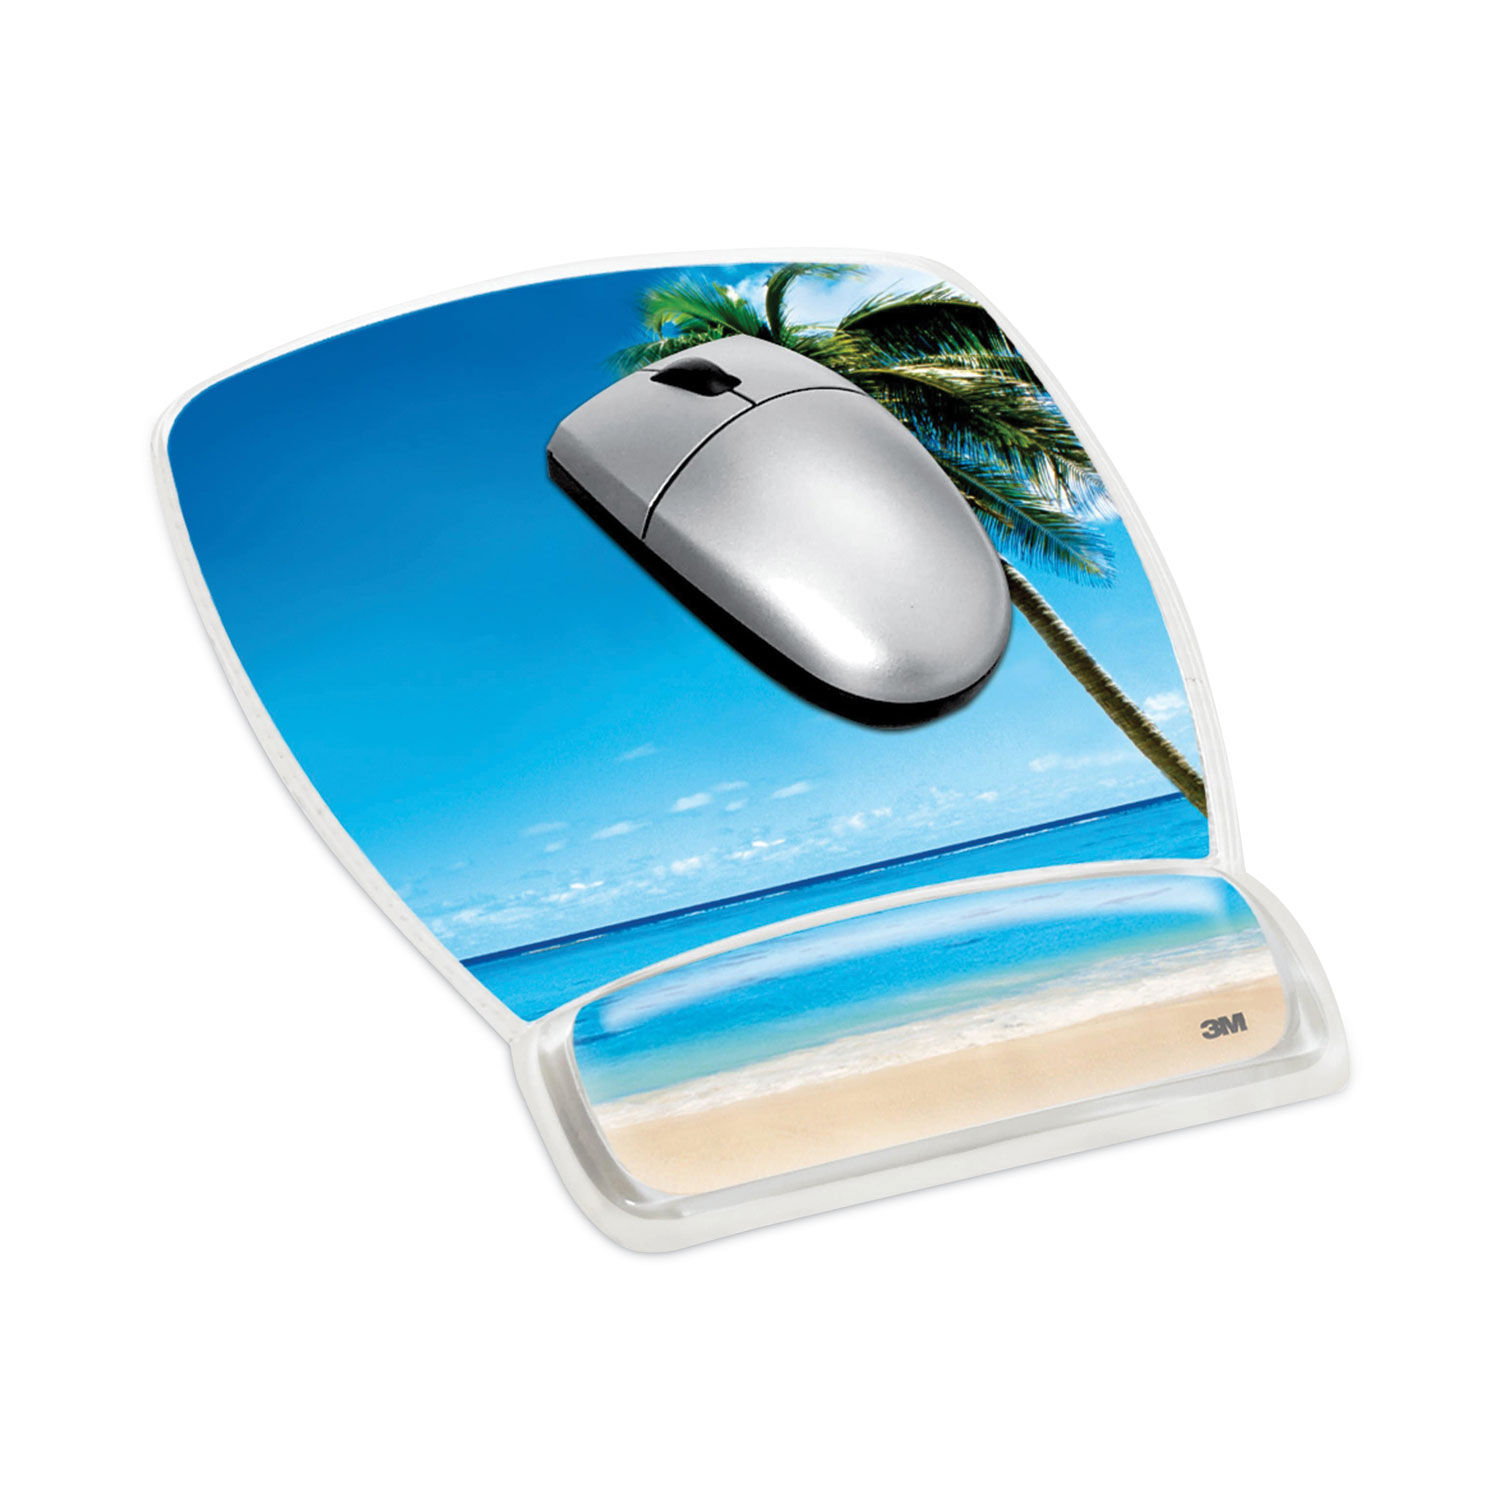 3M Beach Design Gel Mouse Pad Wrist Rest